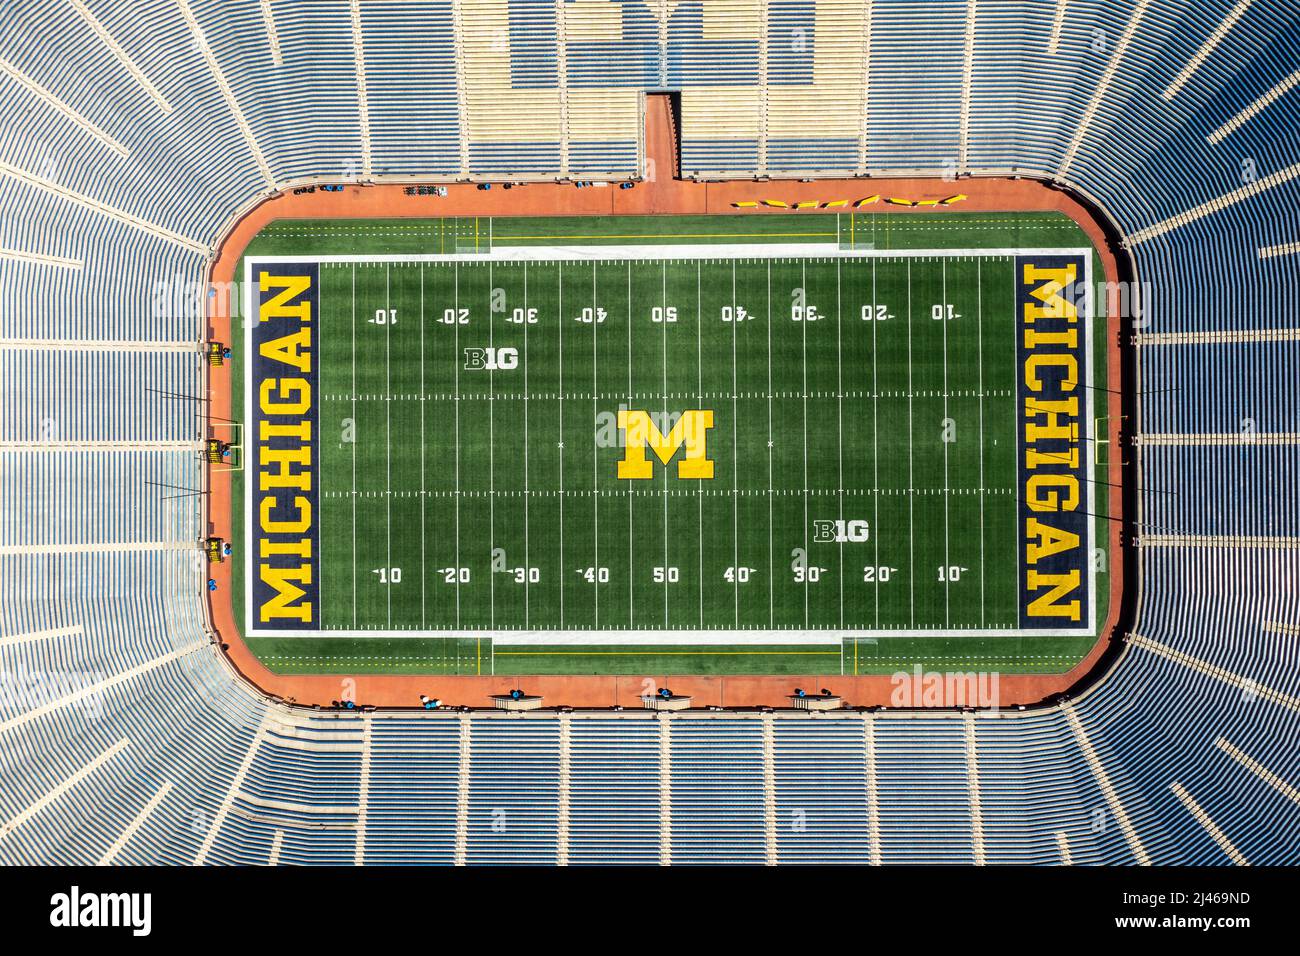 Michigan Stadium, University of Michigan, home of the Wolverines NCAA